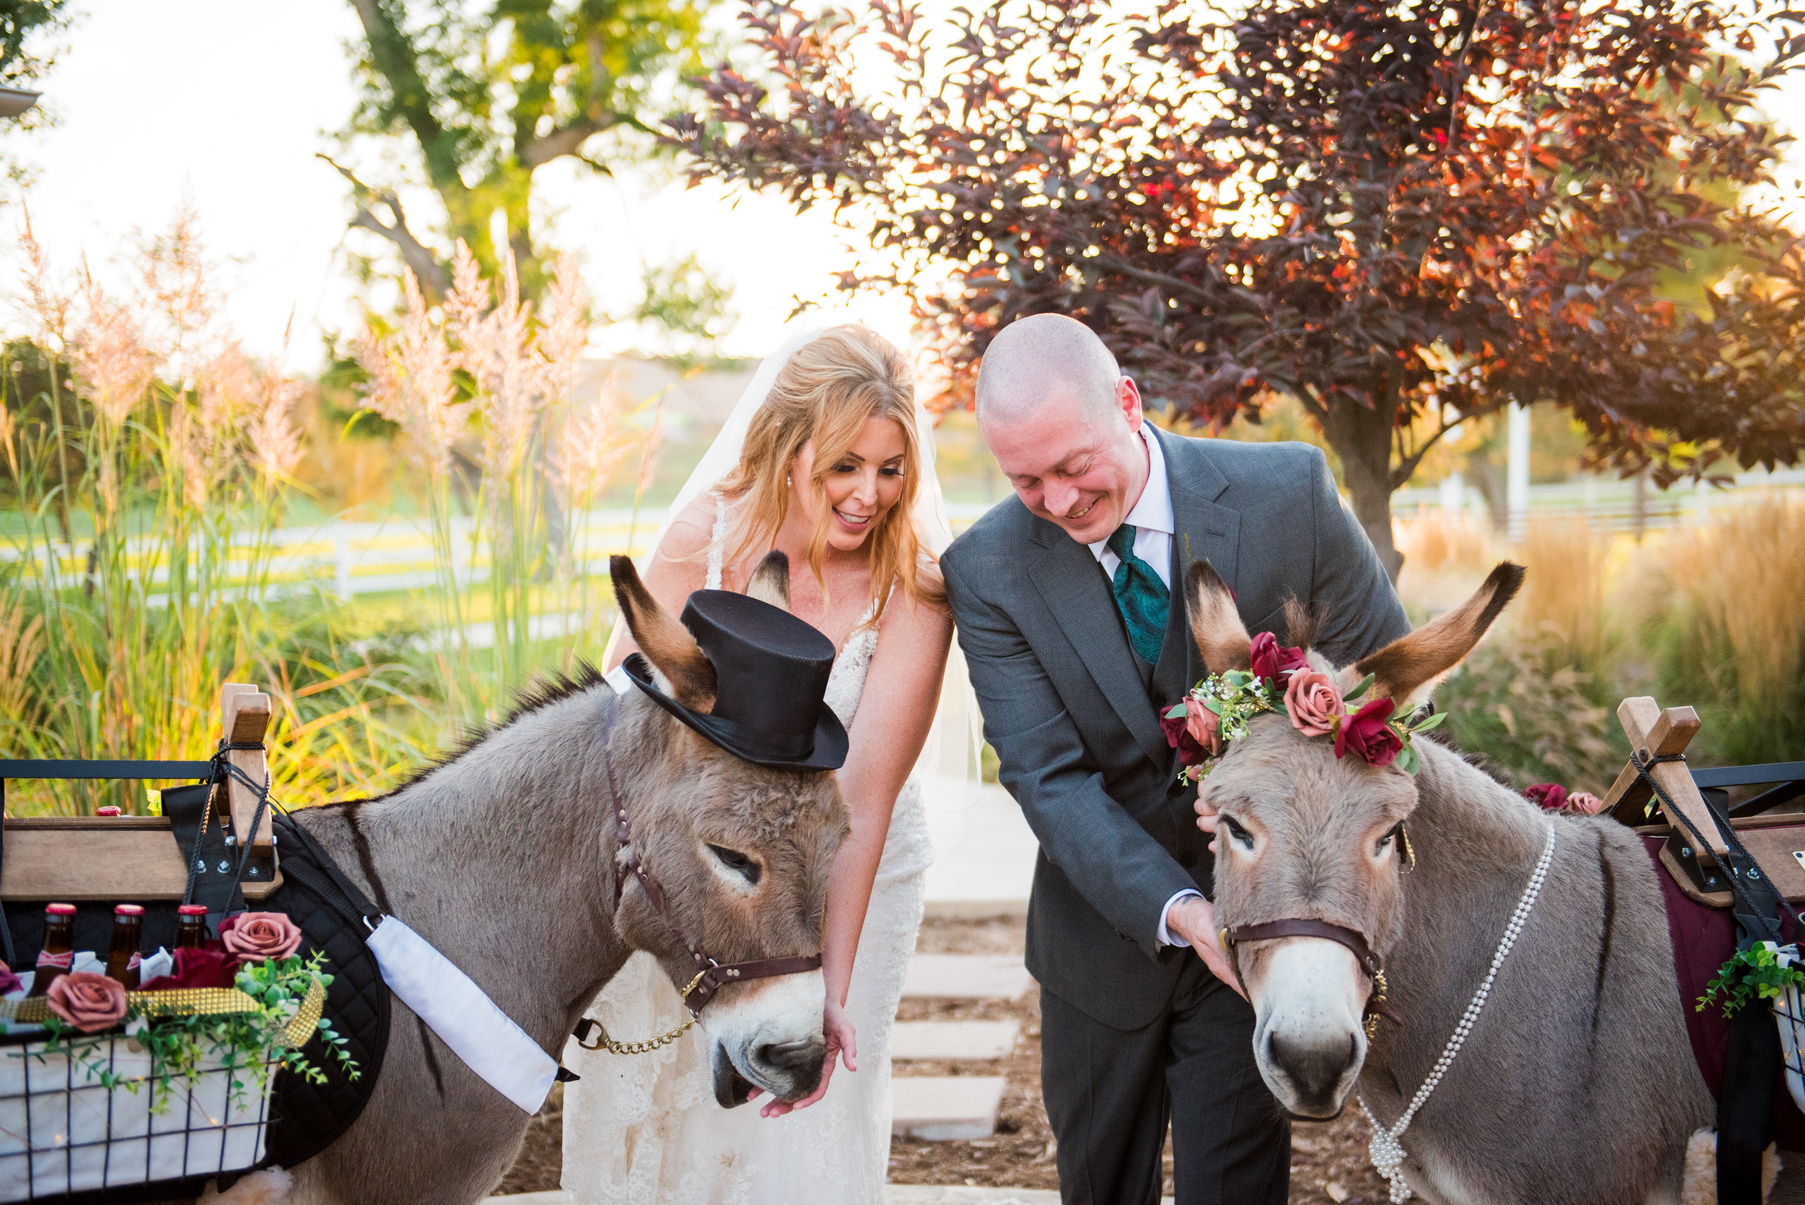 A bride and groom petting donkeys at their wedding at The Barn at Raccoon Creek.